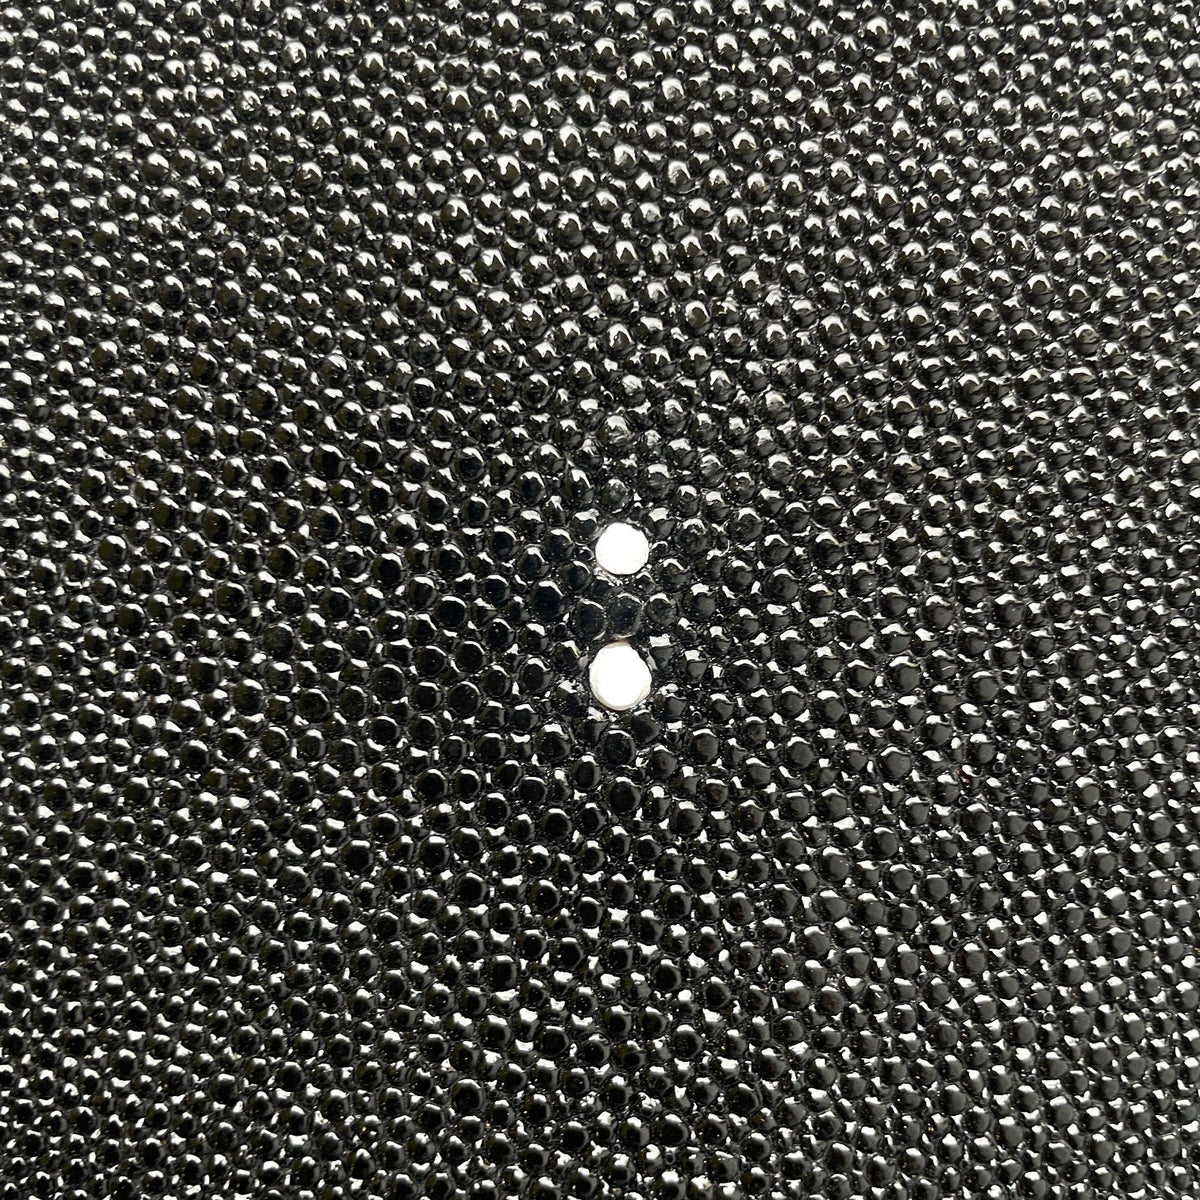 Stingray Skin | Black with 2 White Dots | 1.5/1.8mm | $161 ea.